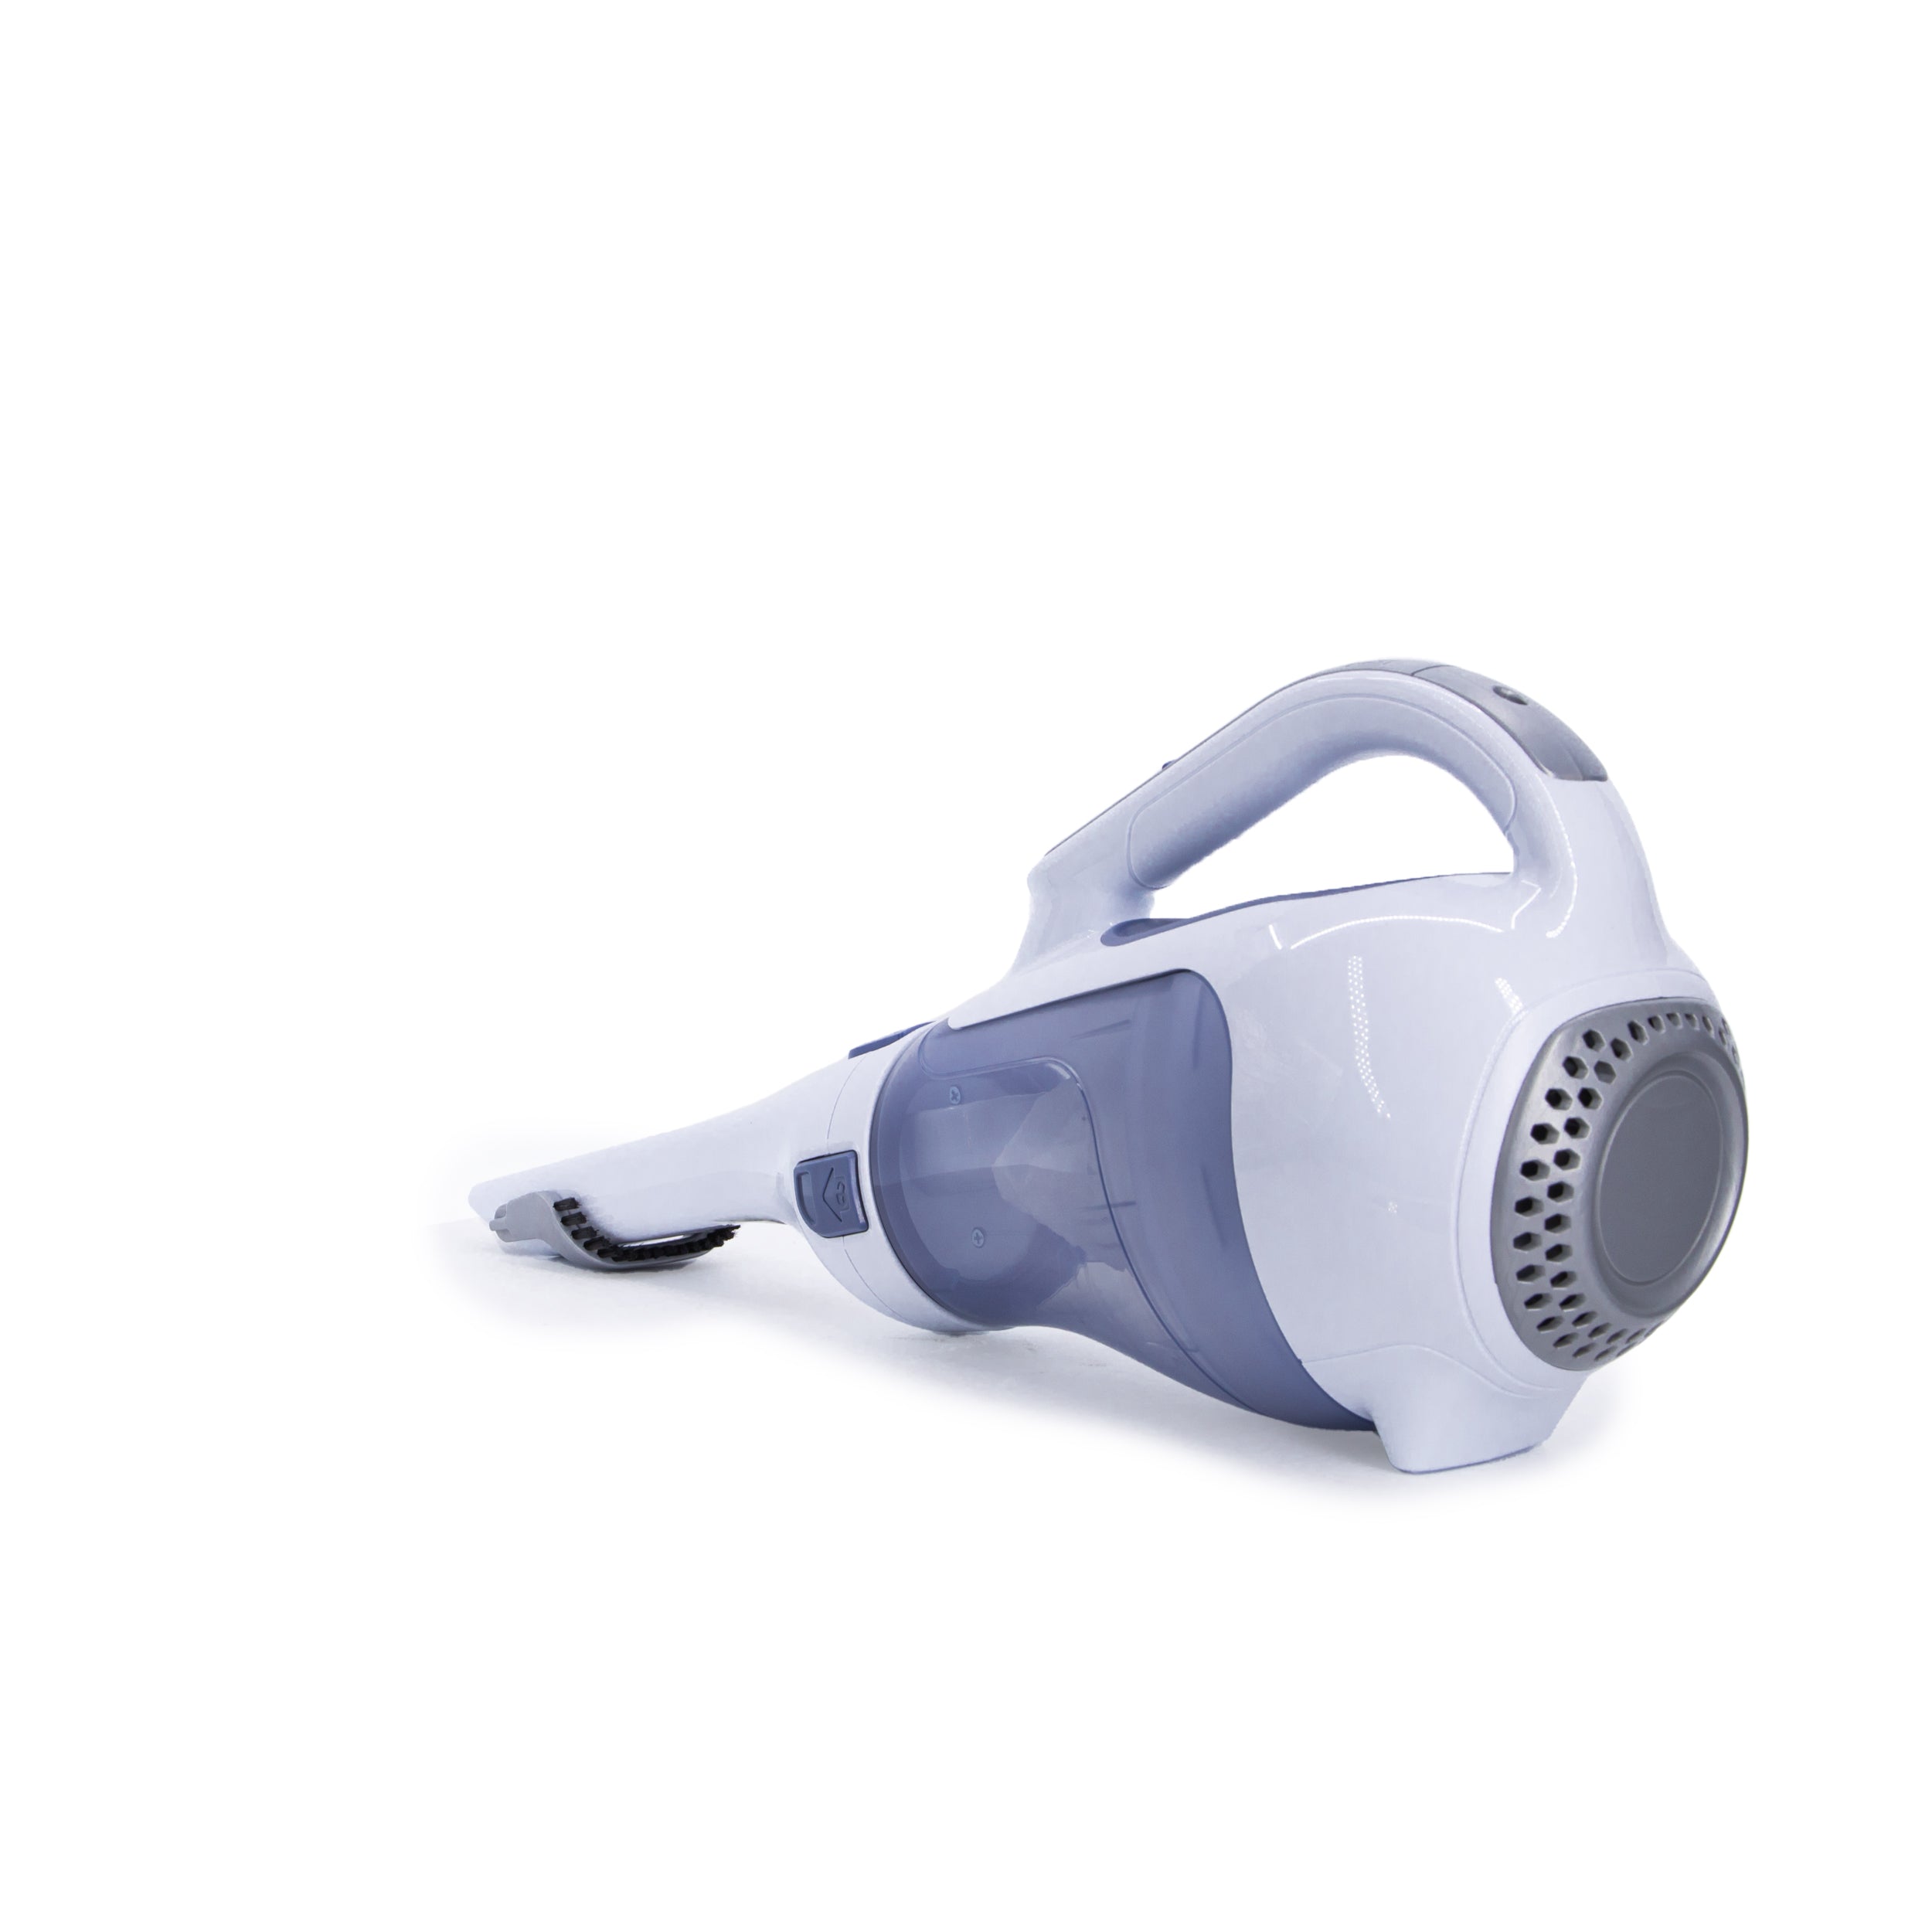 Dustbuster Handheld Vacuum, Cordless, Ink Blue